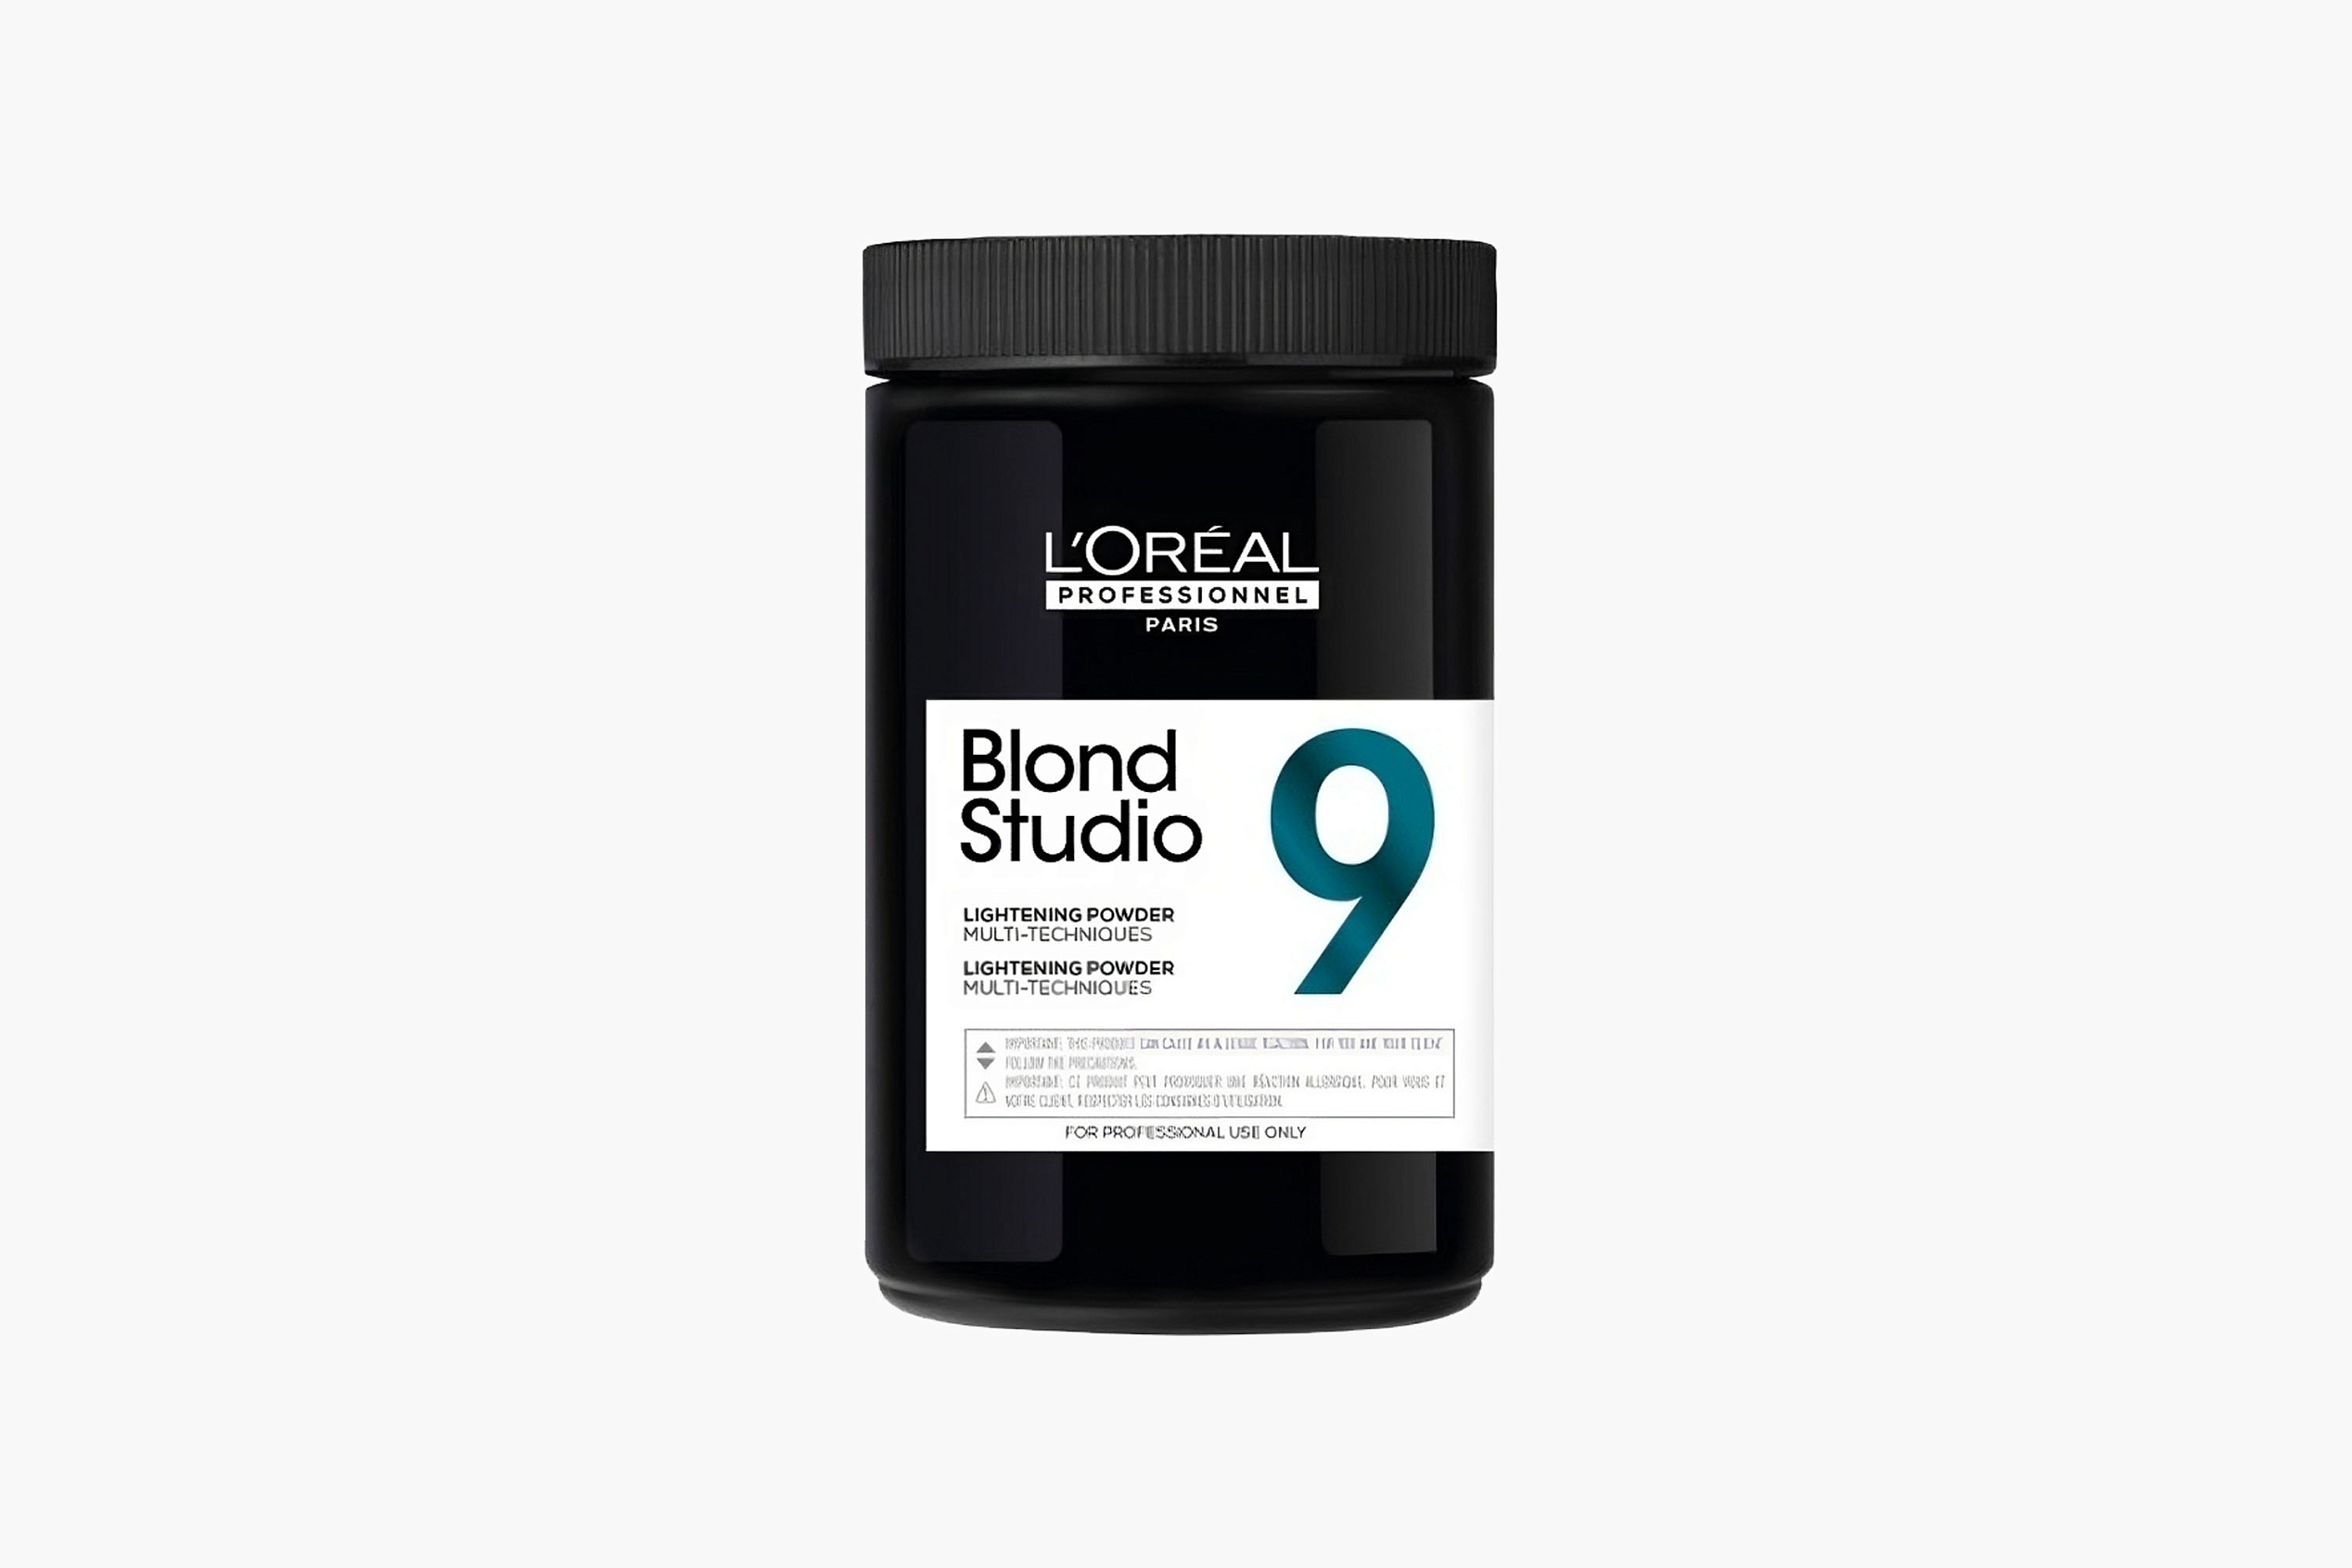 L’oreal Professionnel Blond Studio Bonder Inside Lightening Powder 9 фото 1